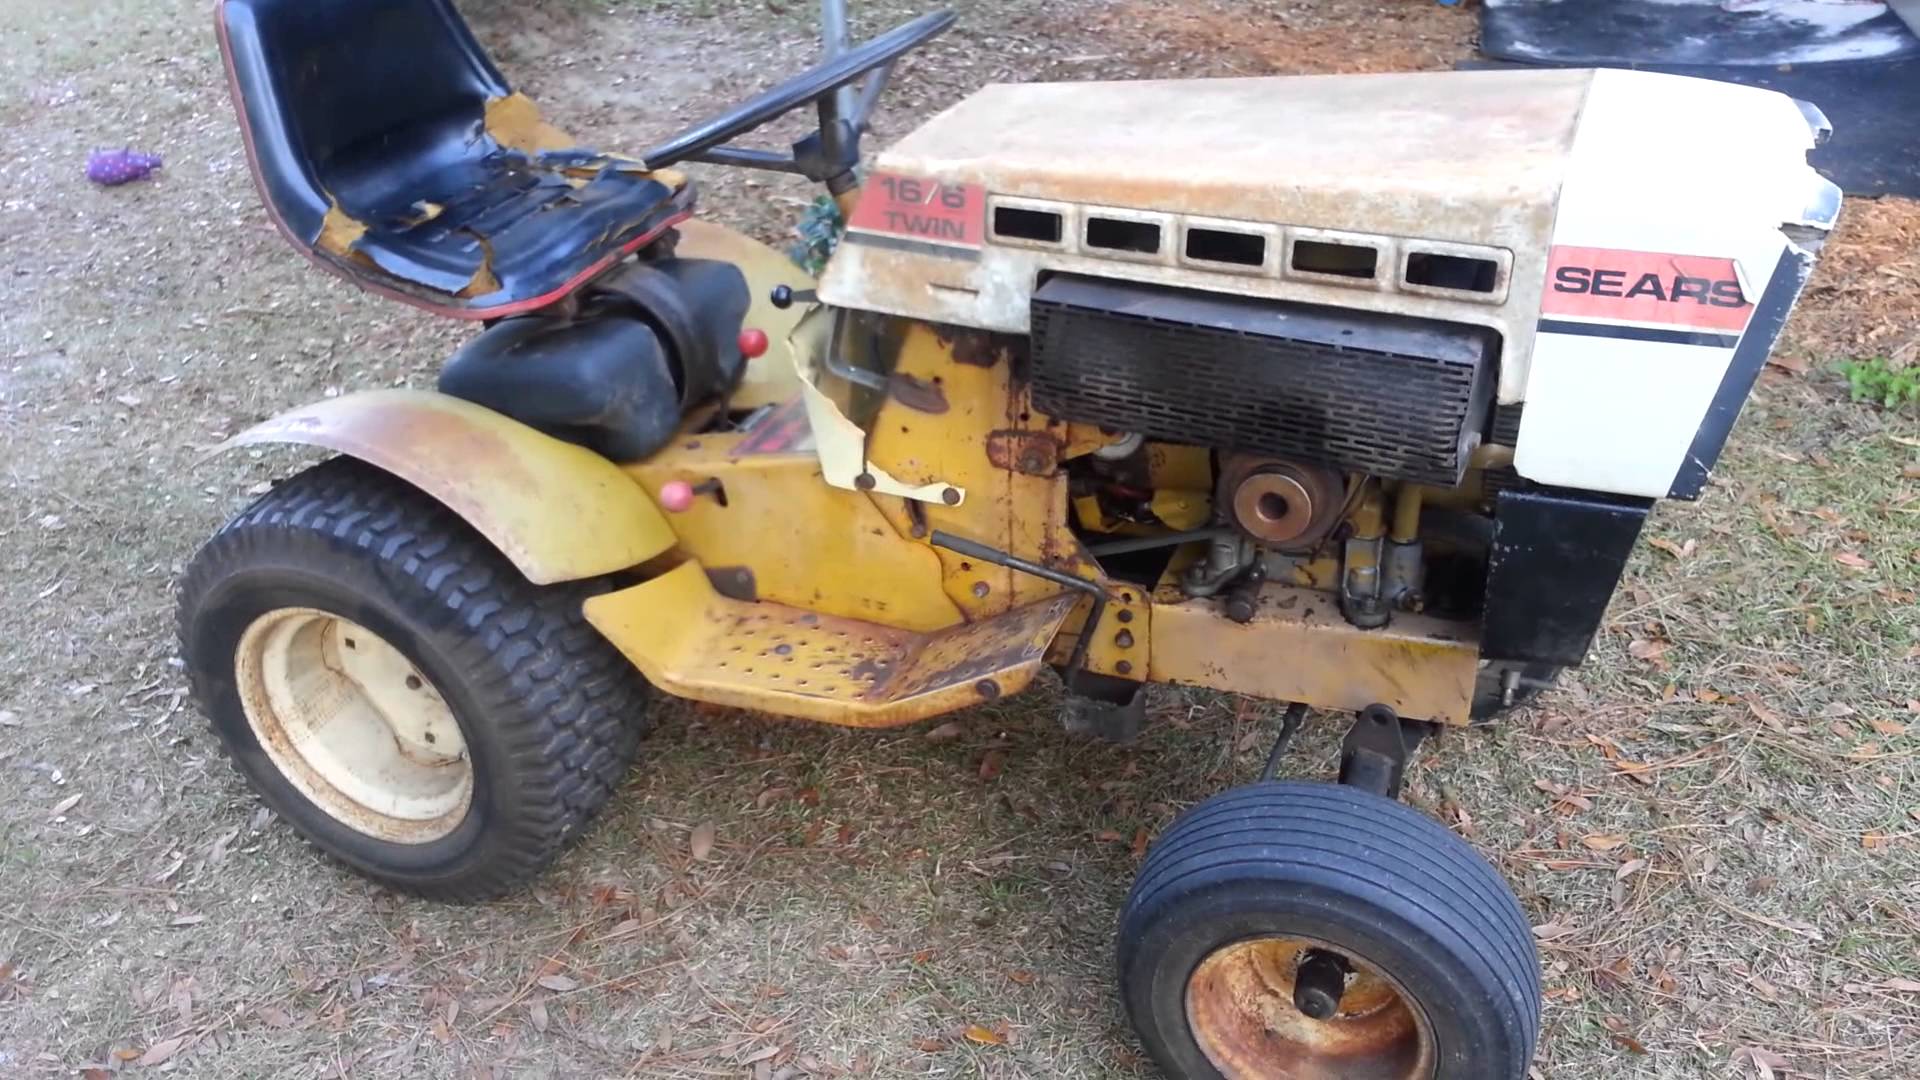 Sears 16-6 garden tractor - YouTube